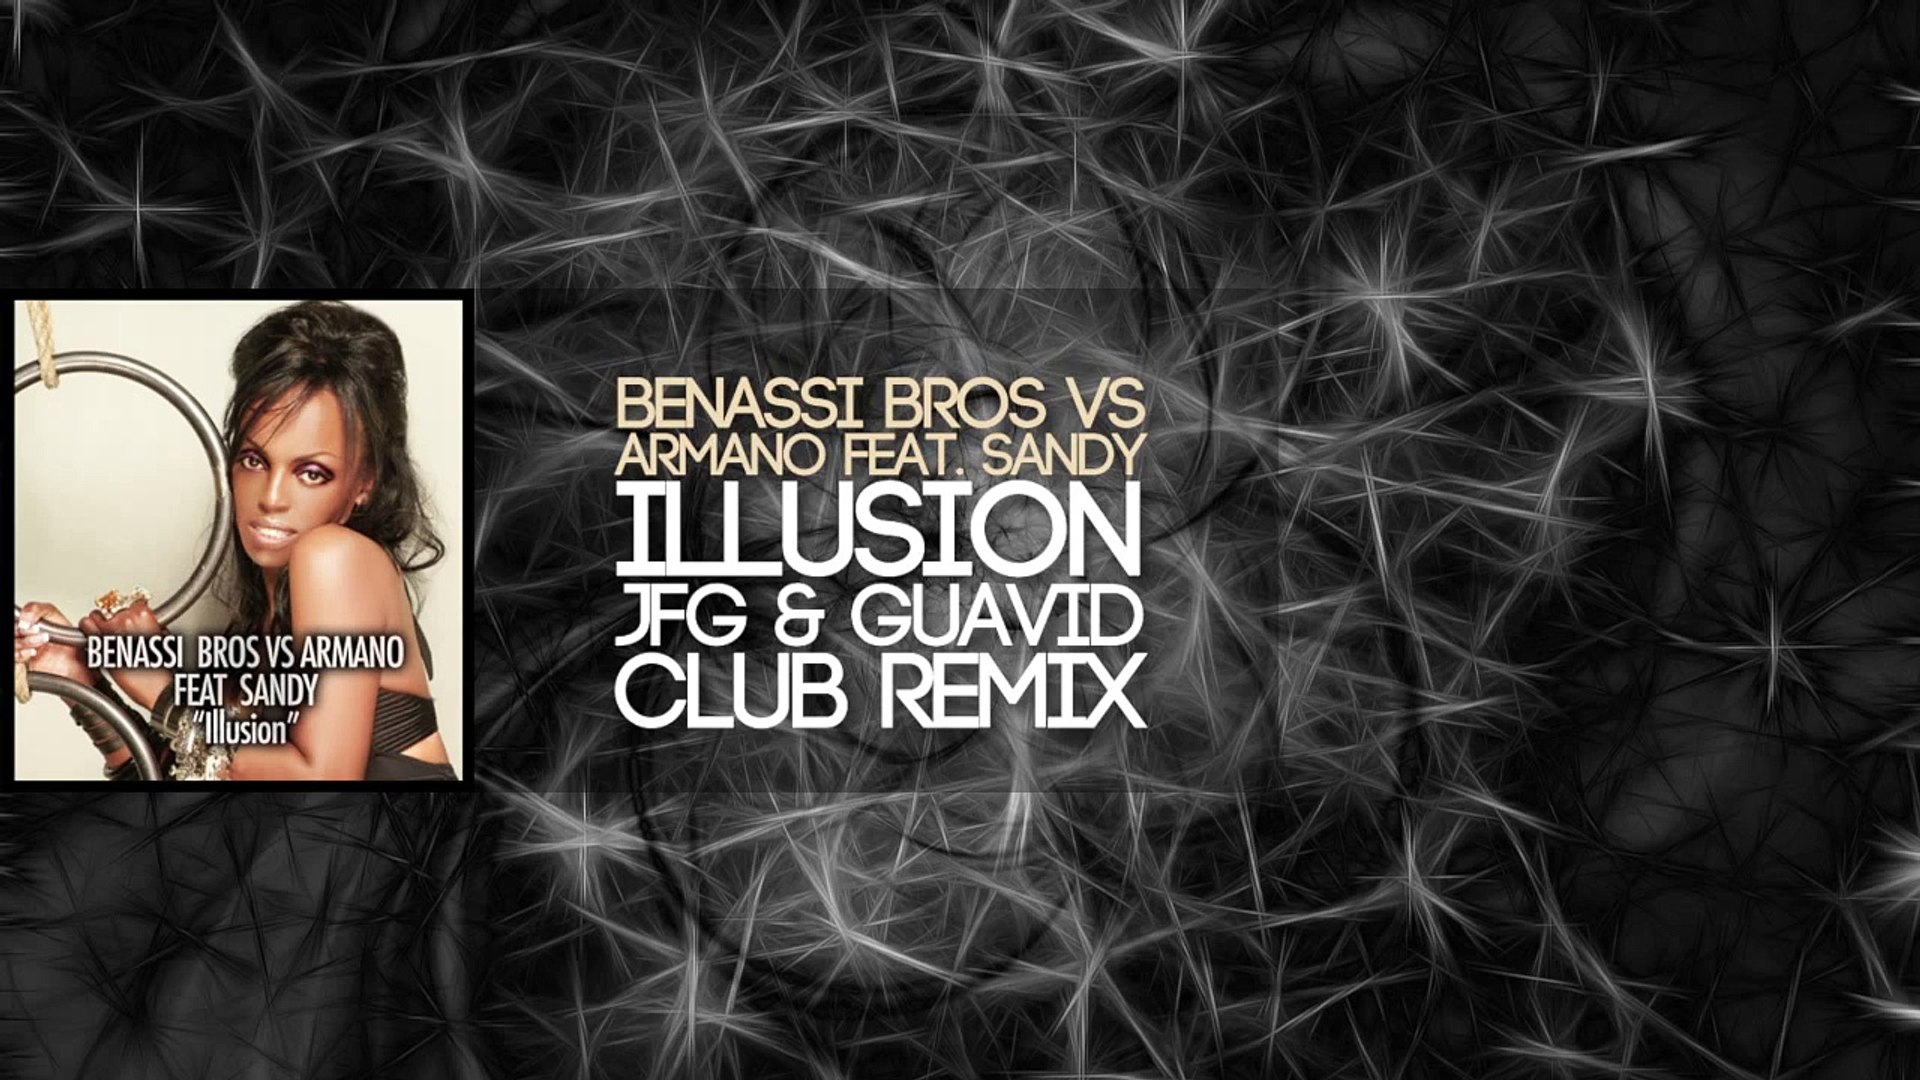 Benassi Bros VS Armano feat. Sandy - Illusion (JFG & Guavid Club Remix) -  Vidéo Dailymotion